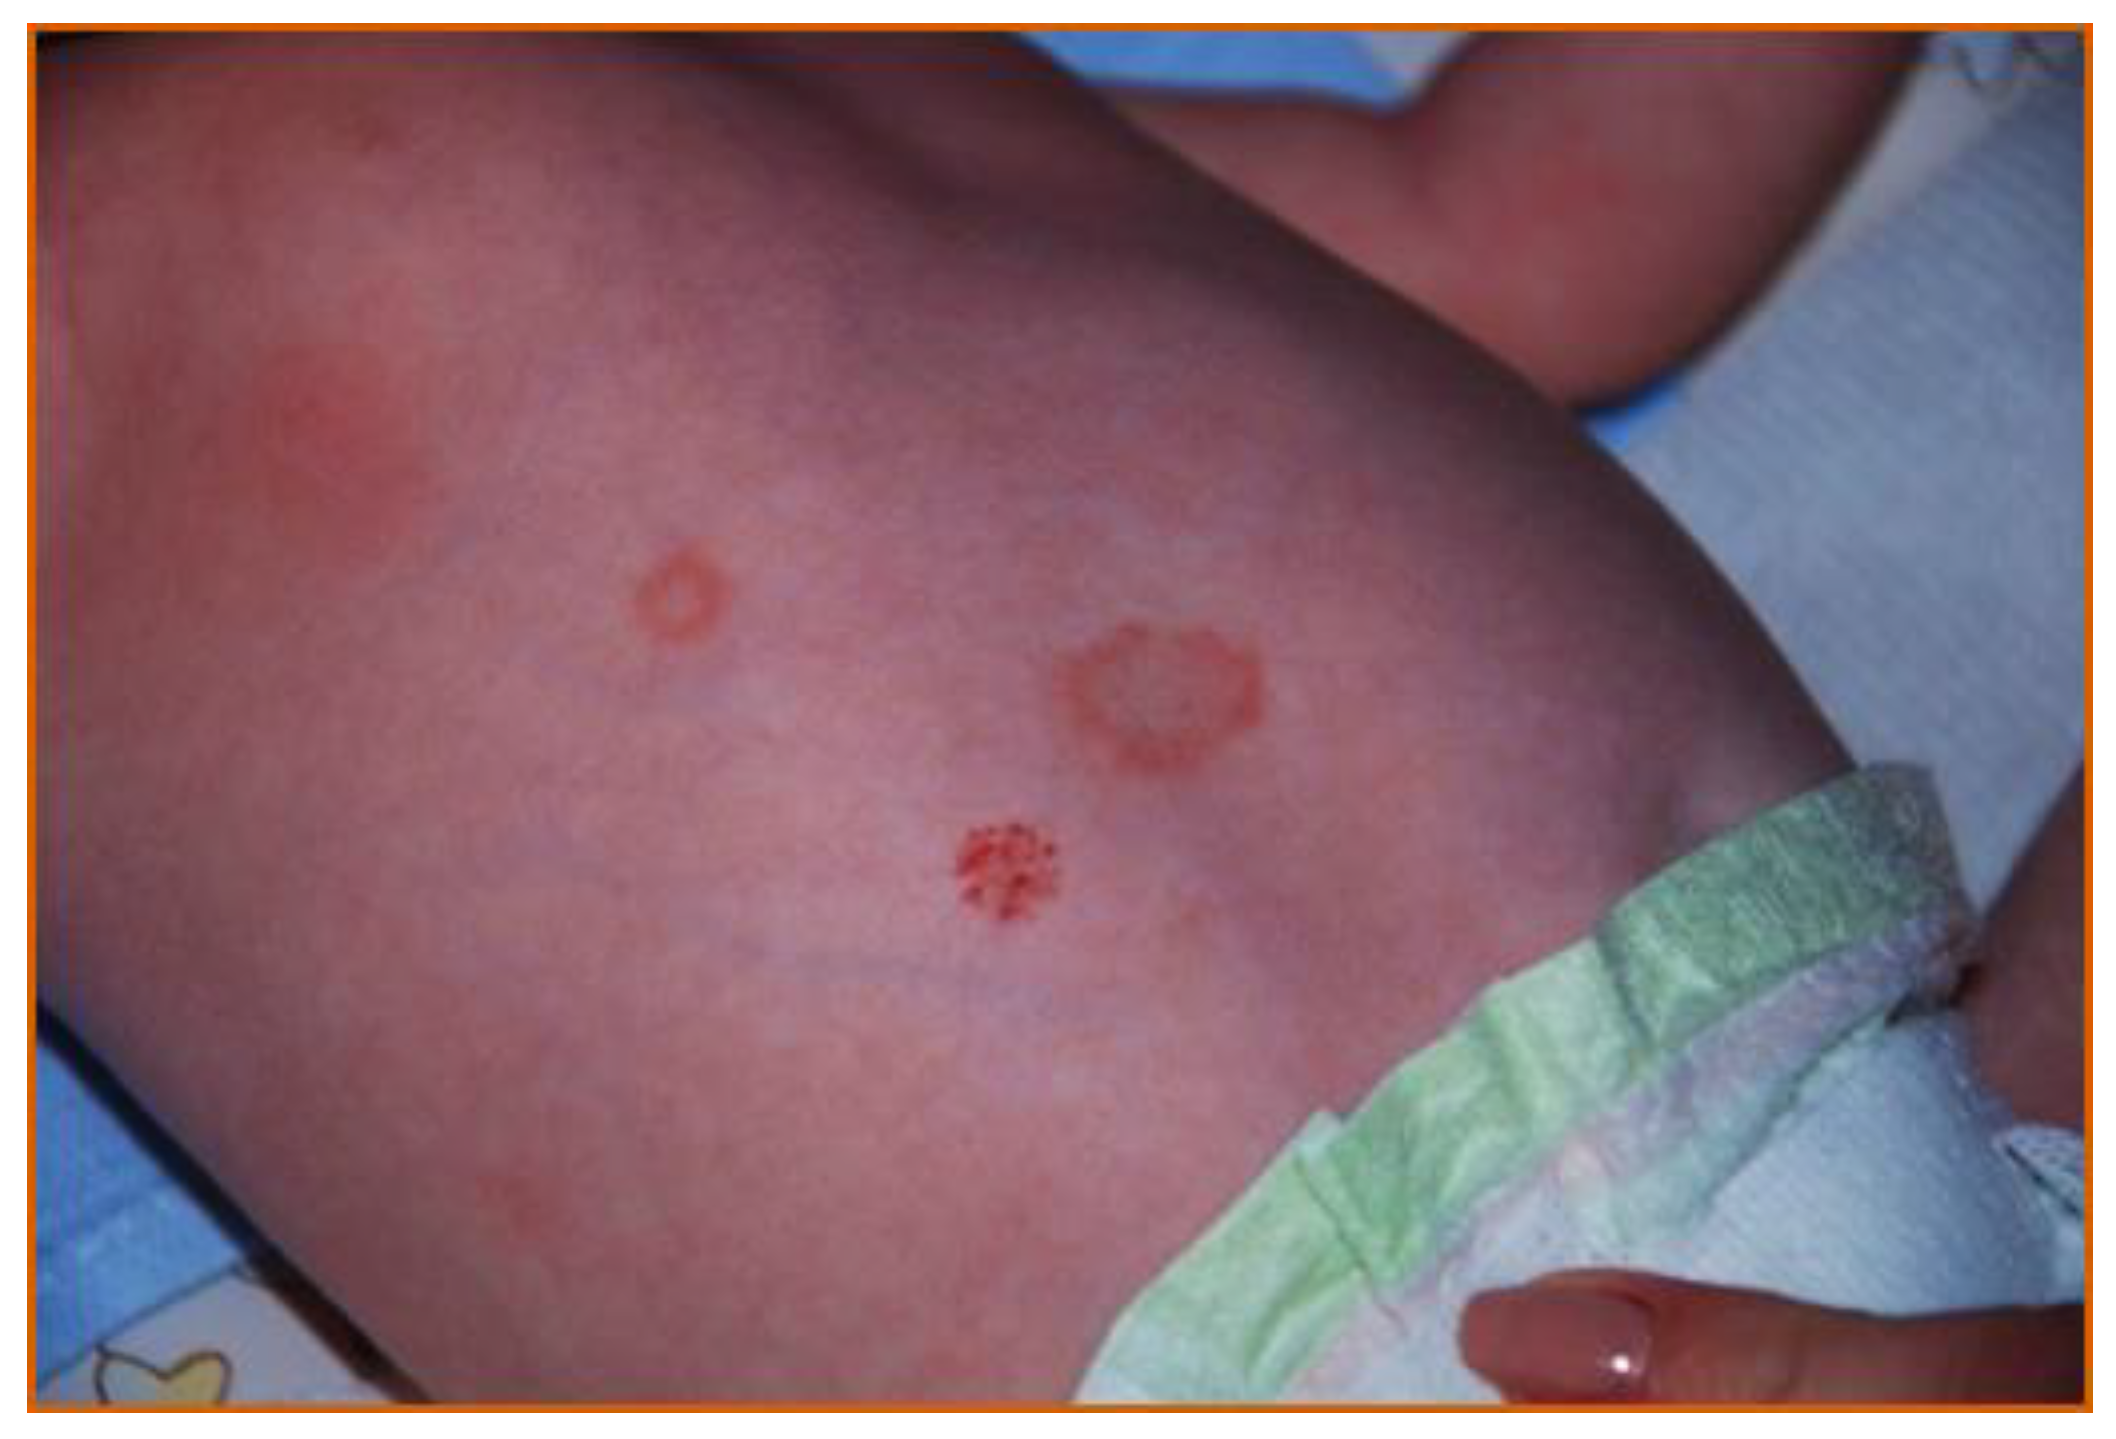 Tinea Faciei (Ringworm on Face): Causes, Symptoms, & Treatment